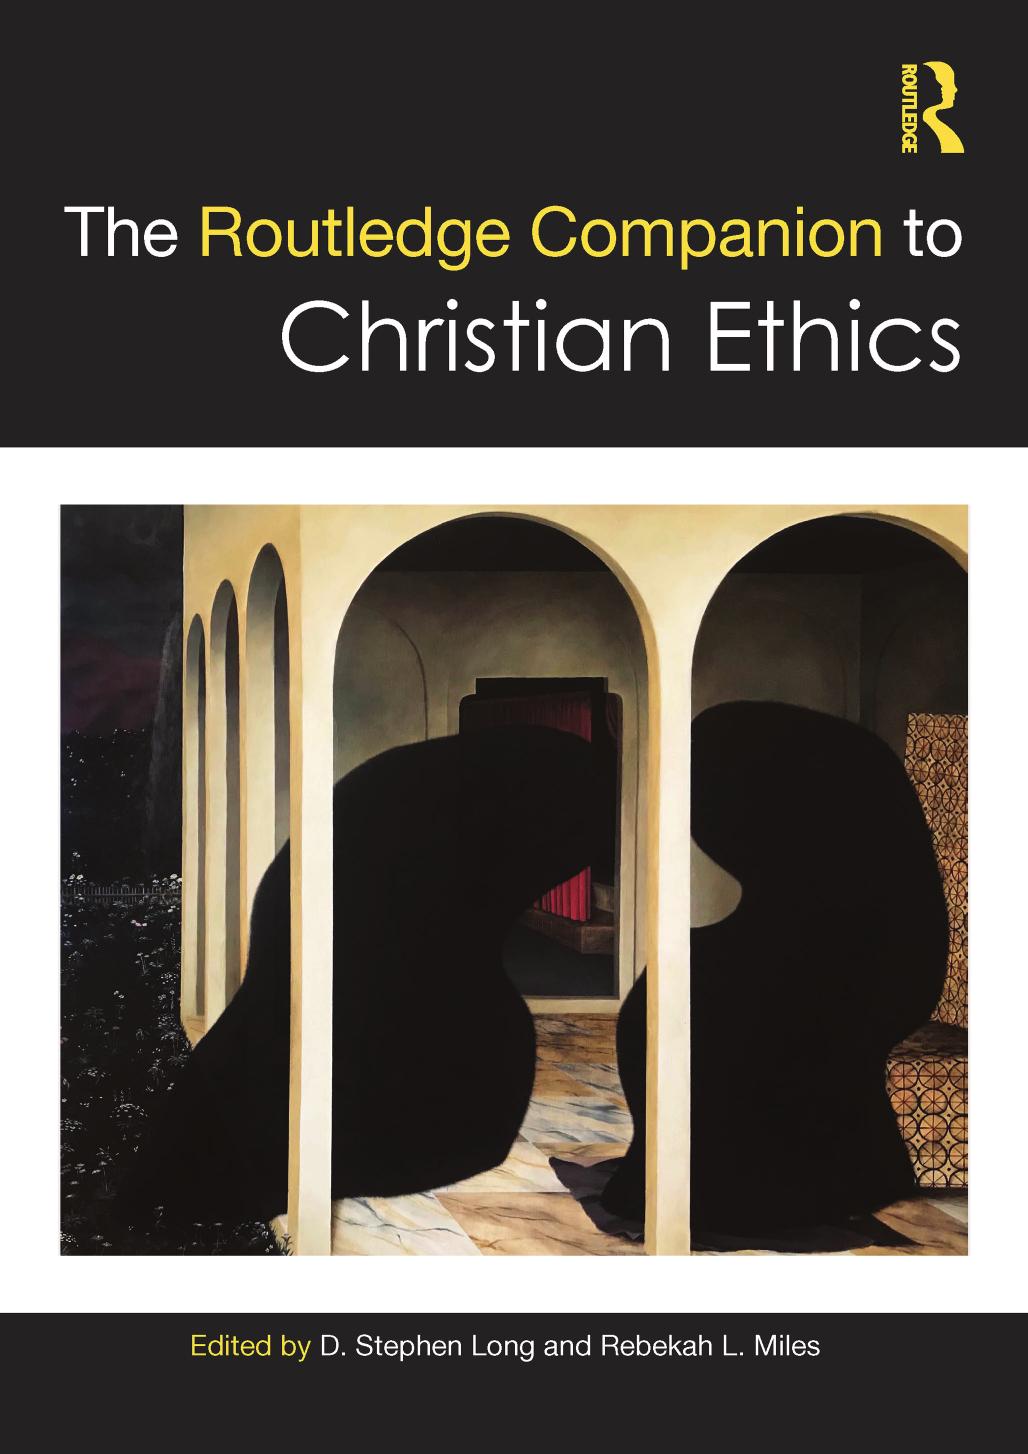 The Routledge companion to Christian ethics by D. Stephen Long Rebekah L. Miles